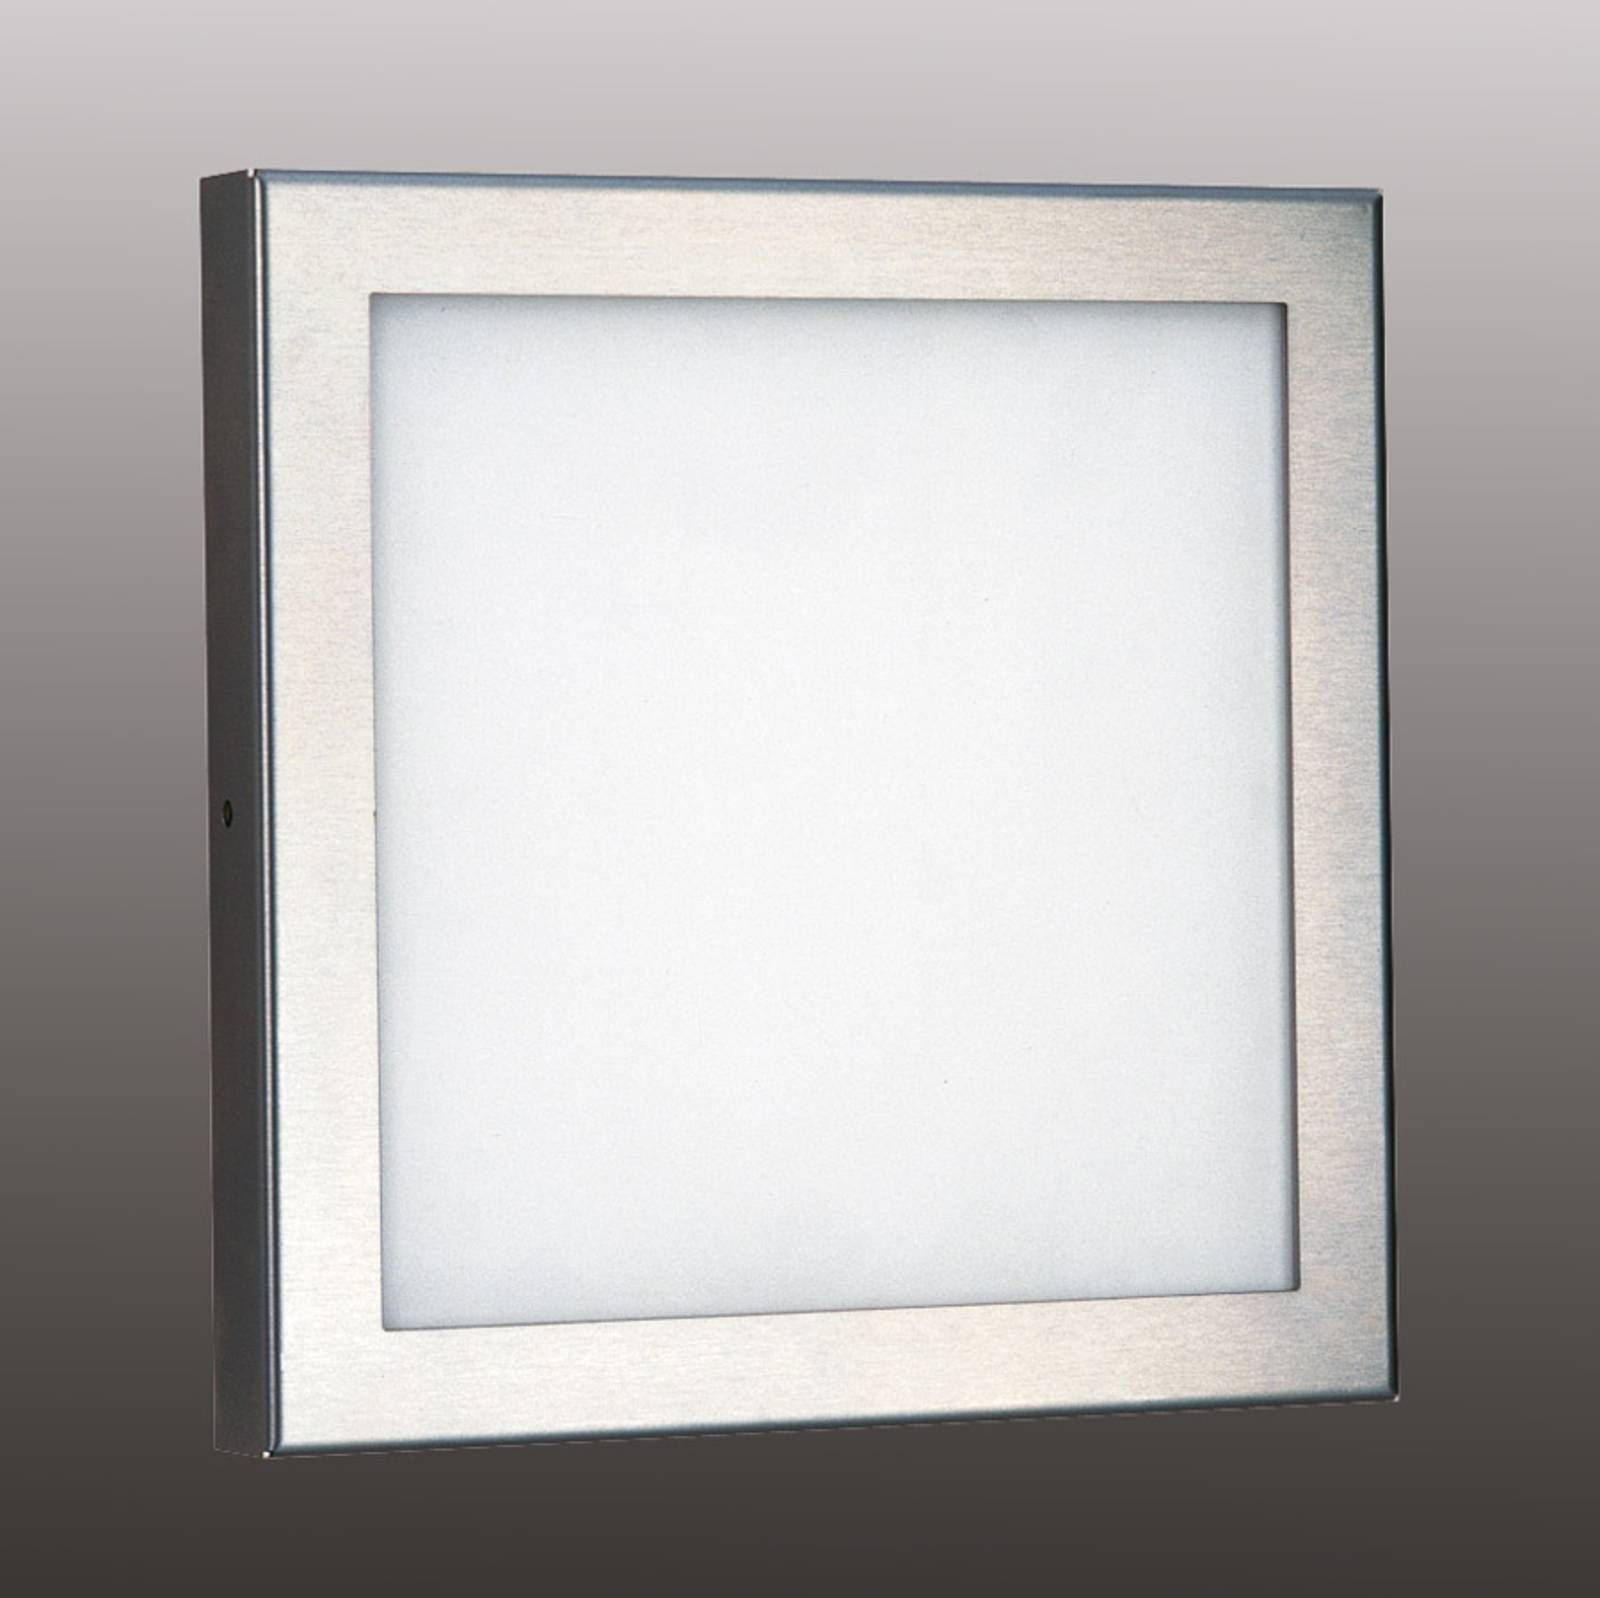 Albert Leuchten Svietidlo Mette kvalitná ušľachtilá oceľ LED, ušľachtilá oceľ, sklo, 16W, L: 26 cm, K: 26cm